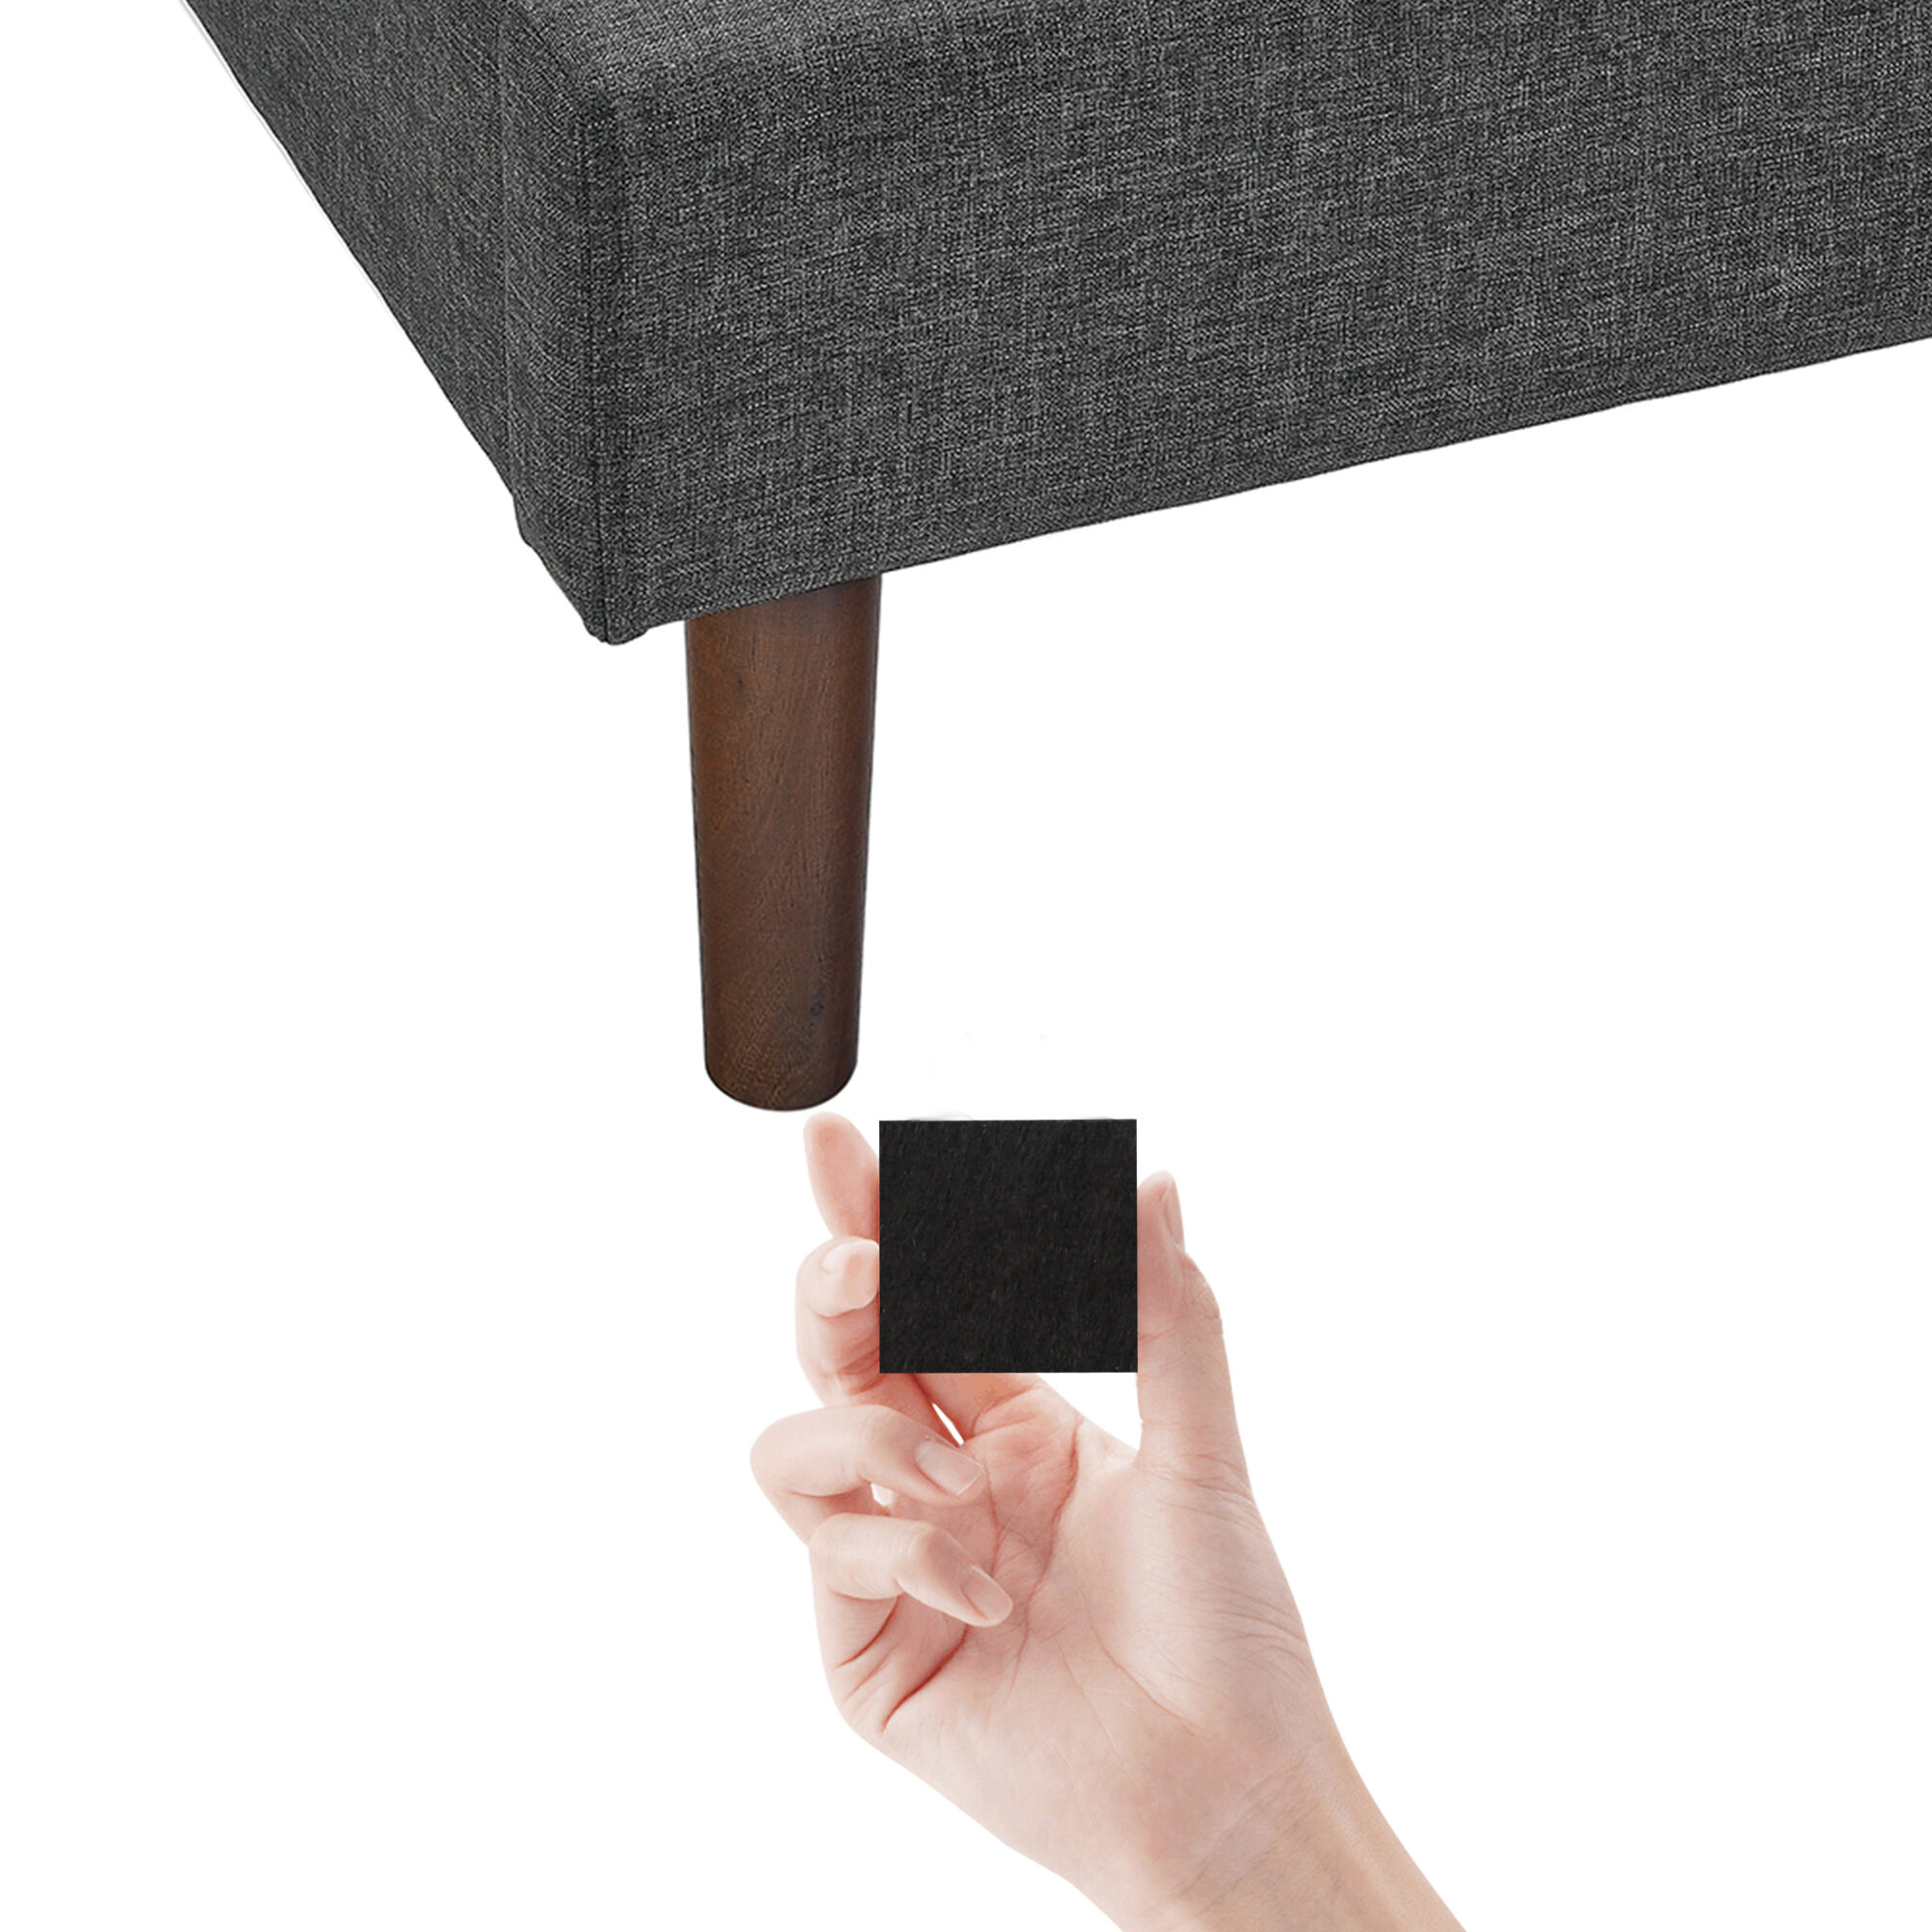 48 Pcs Non-slip Self Adhesive Furniture  Feet Pads Chair Floor Protectors 